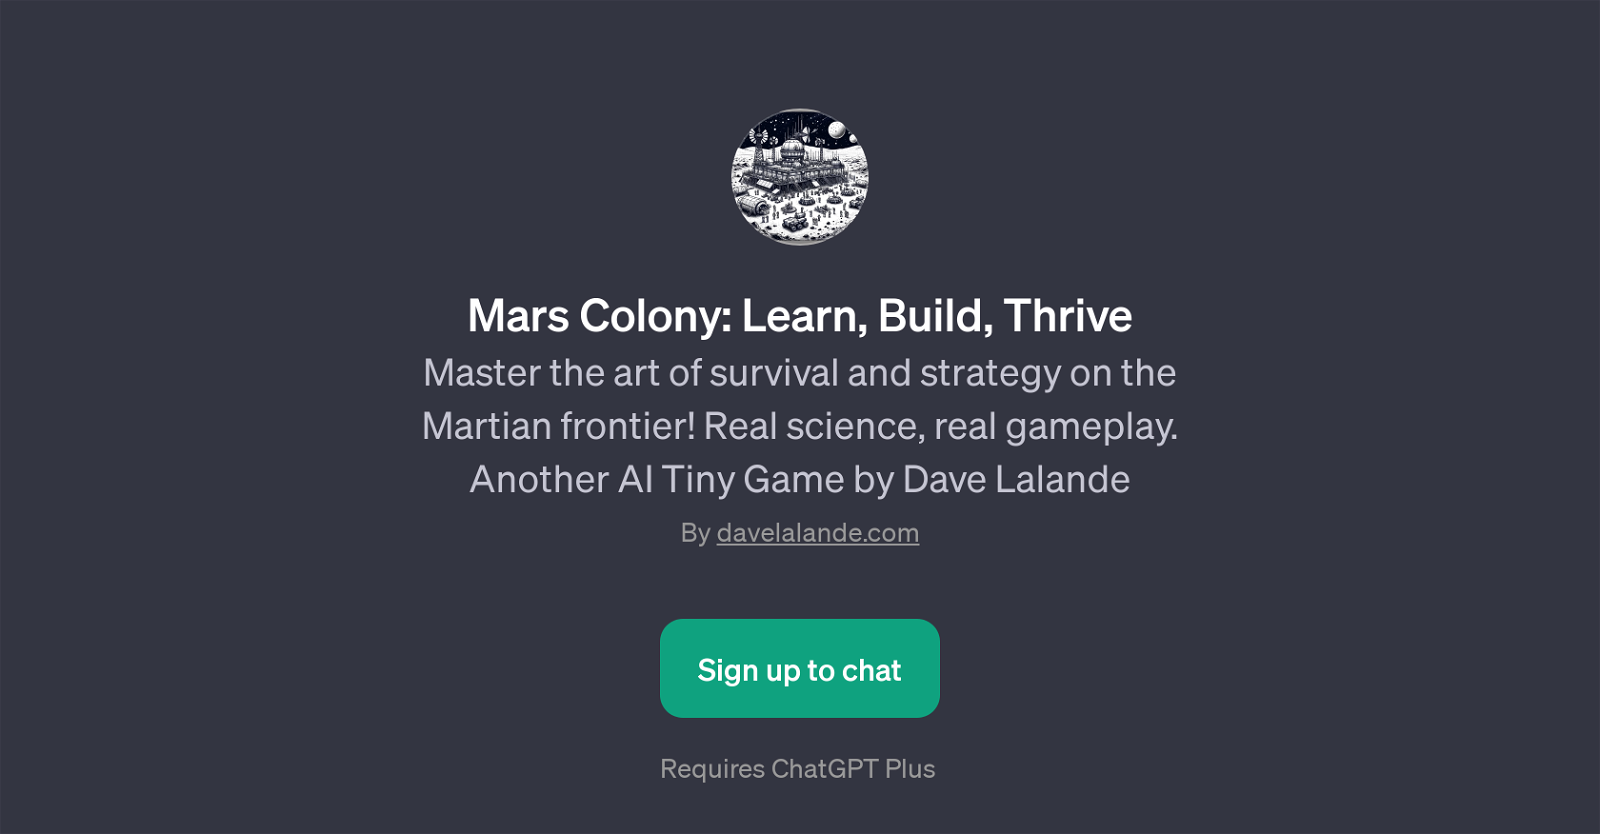 Mars Colony: Learn, Build, Thrive website